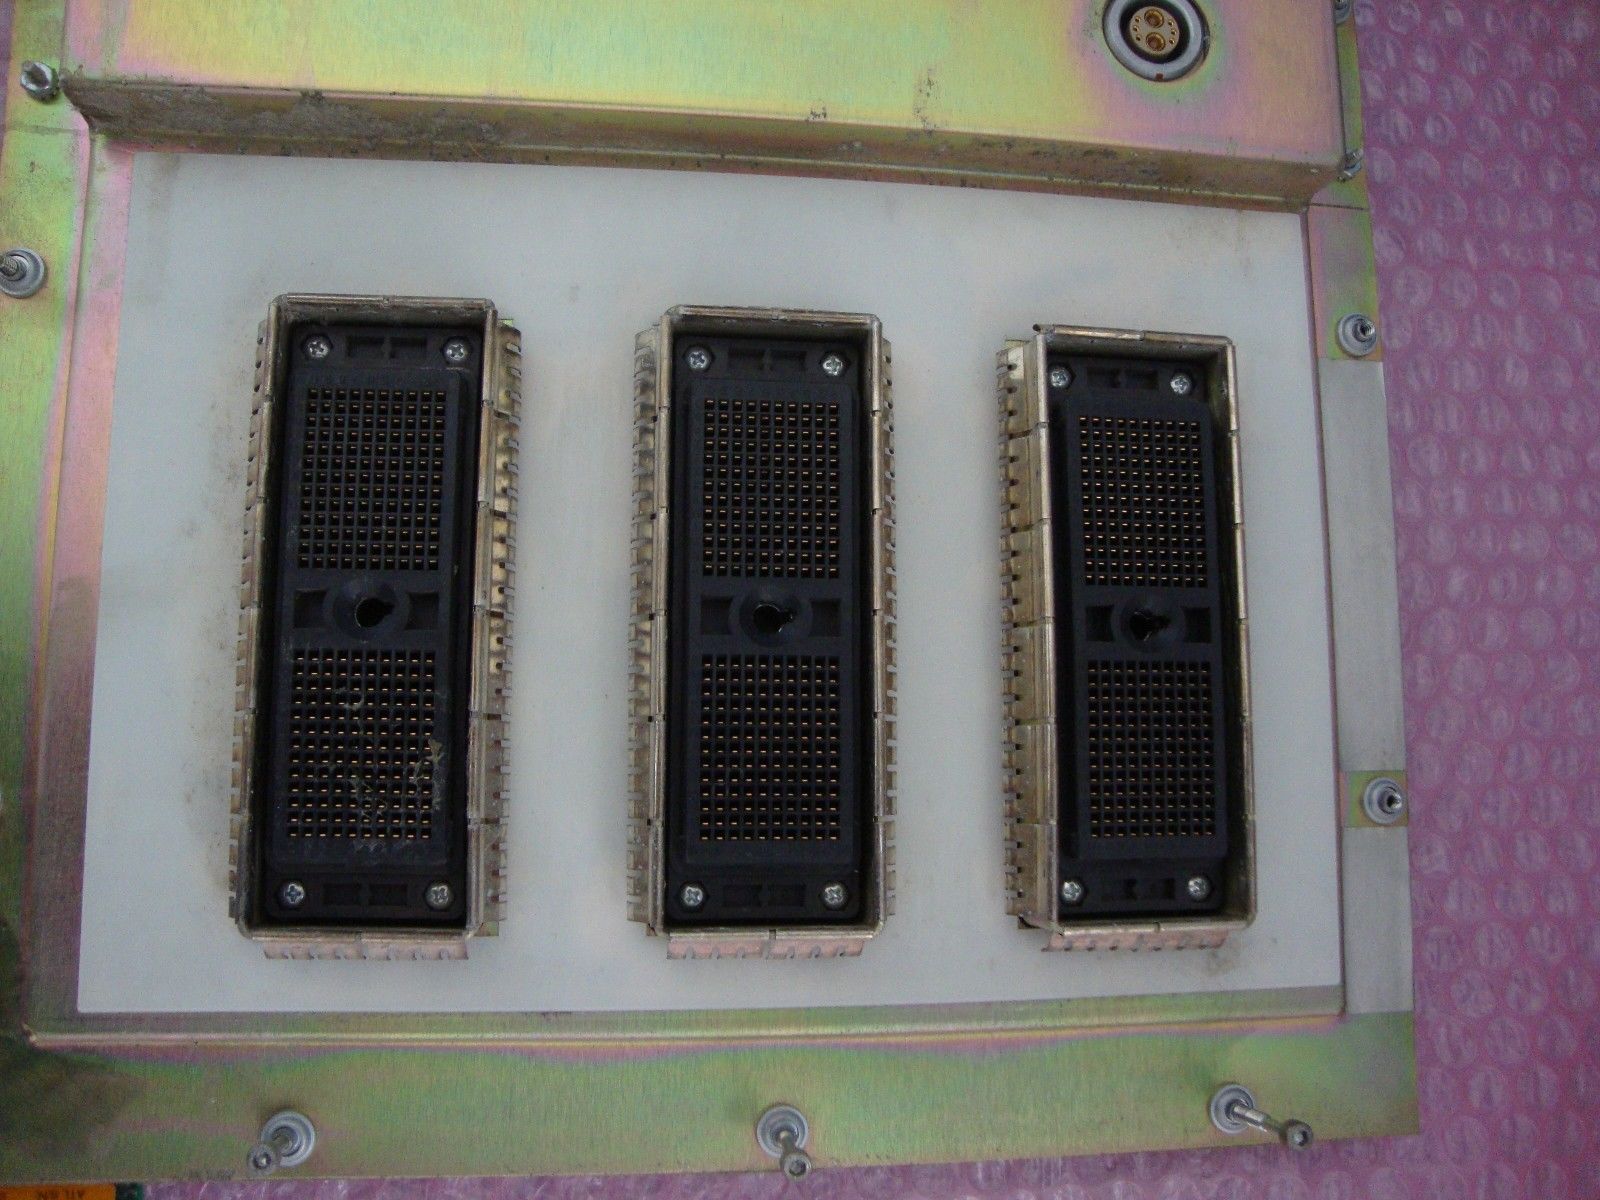 probe connector board part closeup 